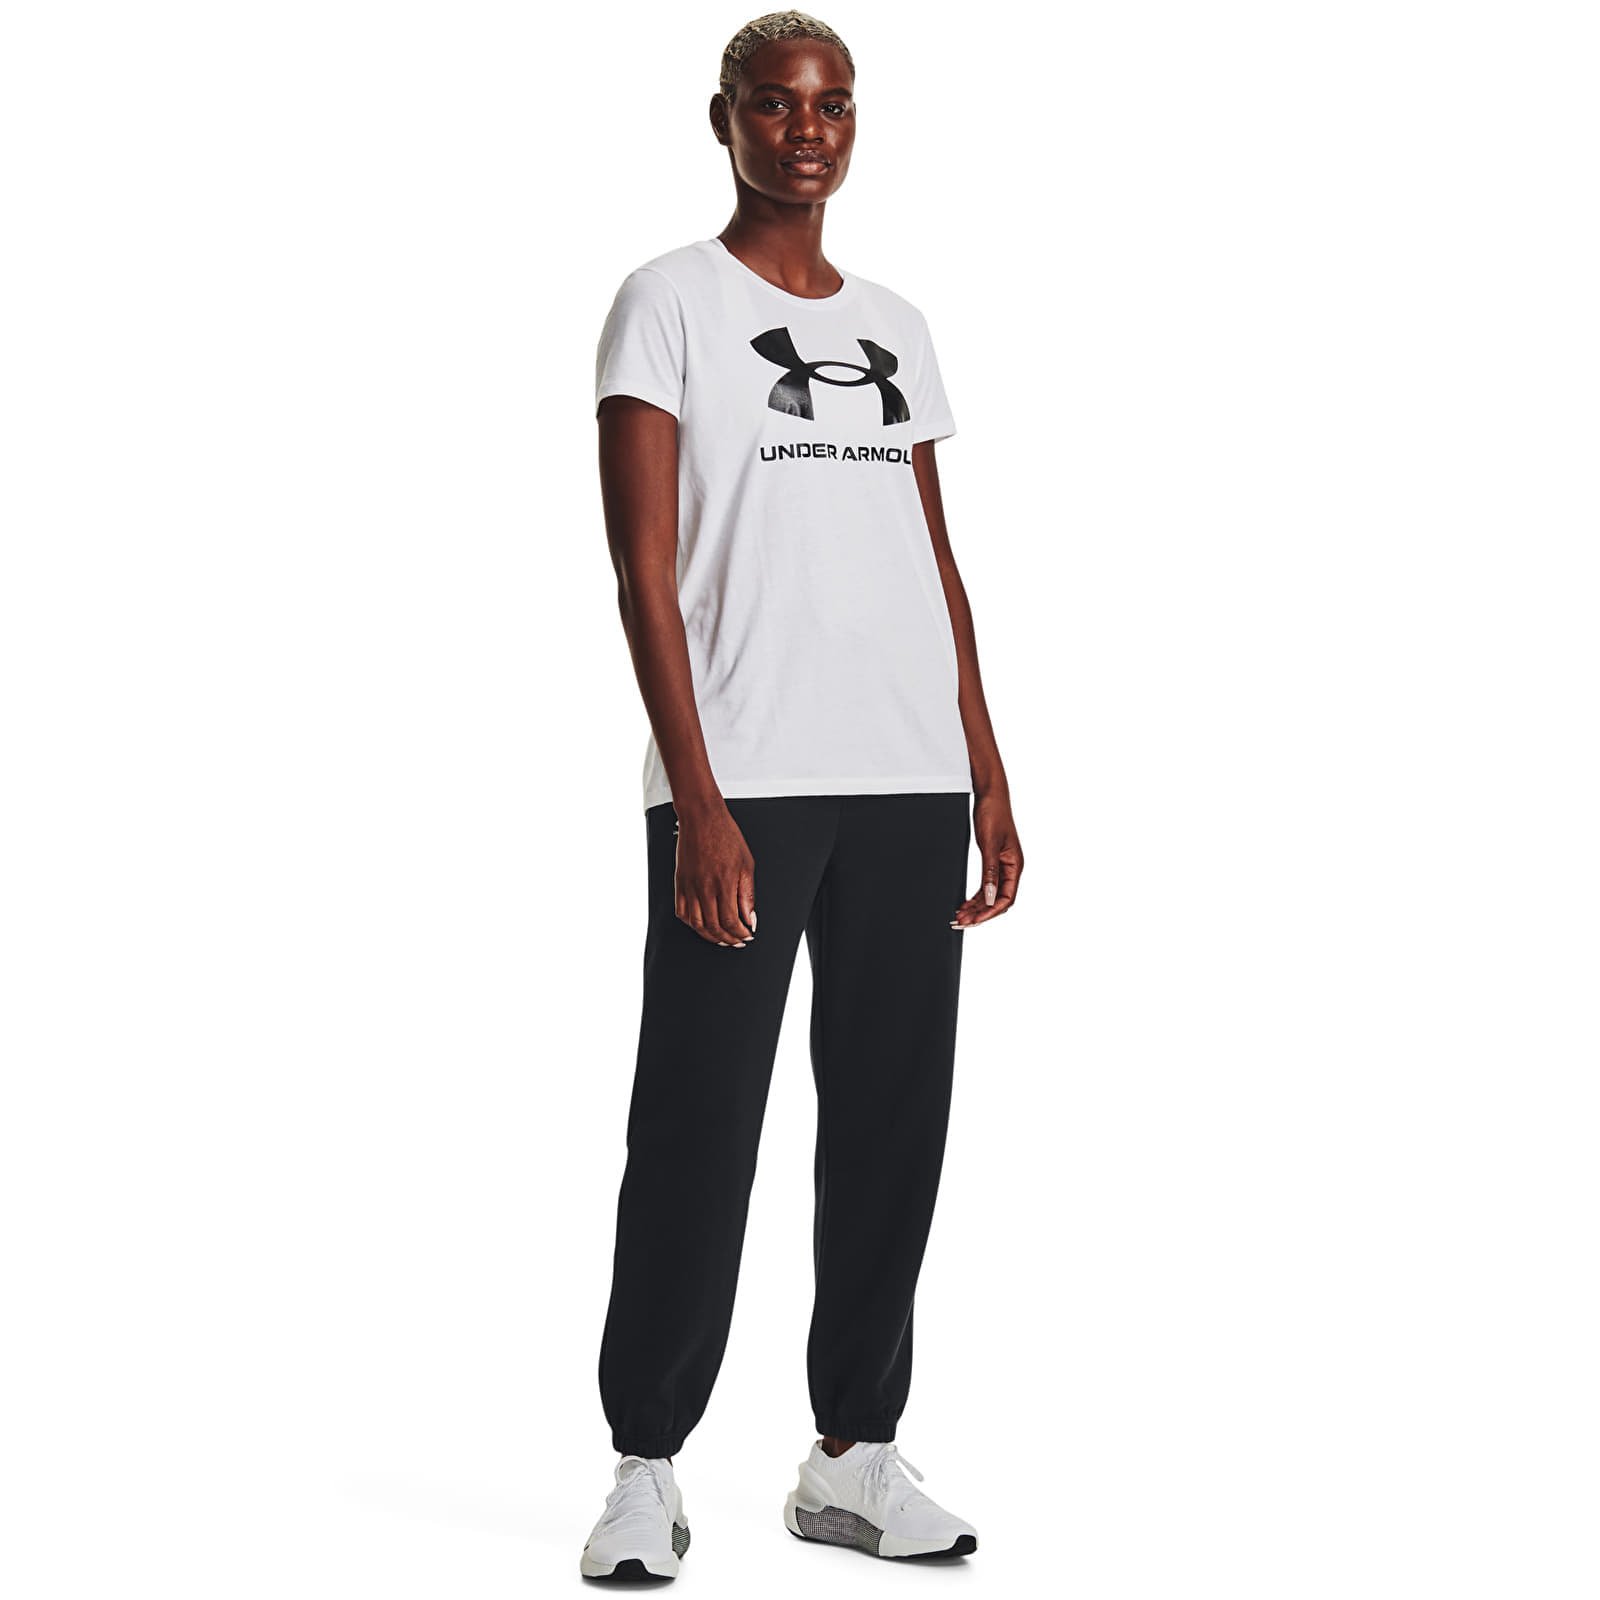 Buy Under Armour Essential Sweatpants black-white (1373034-001